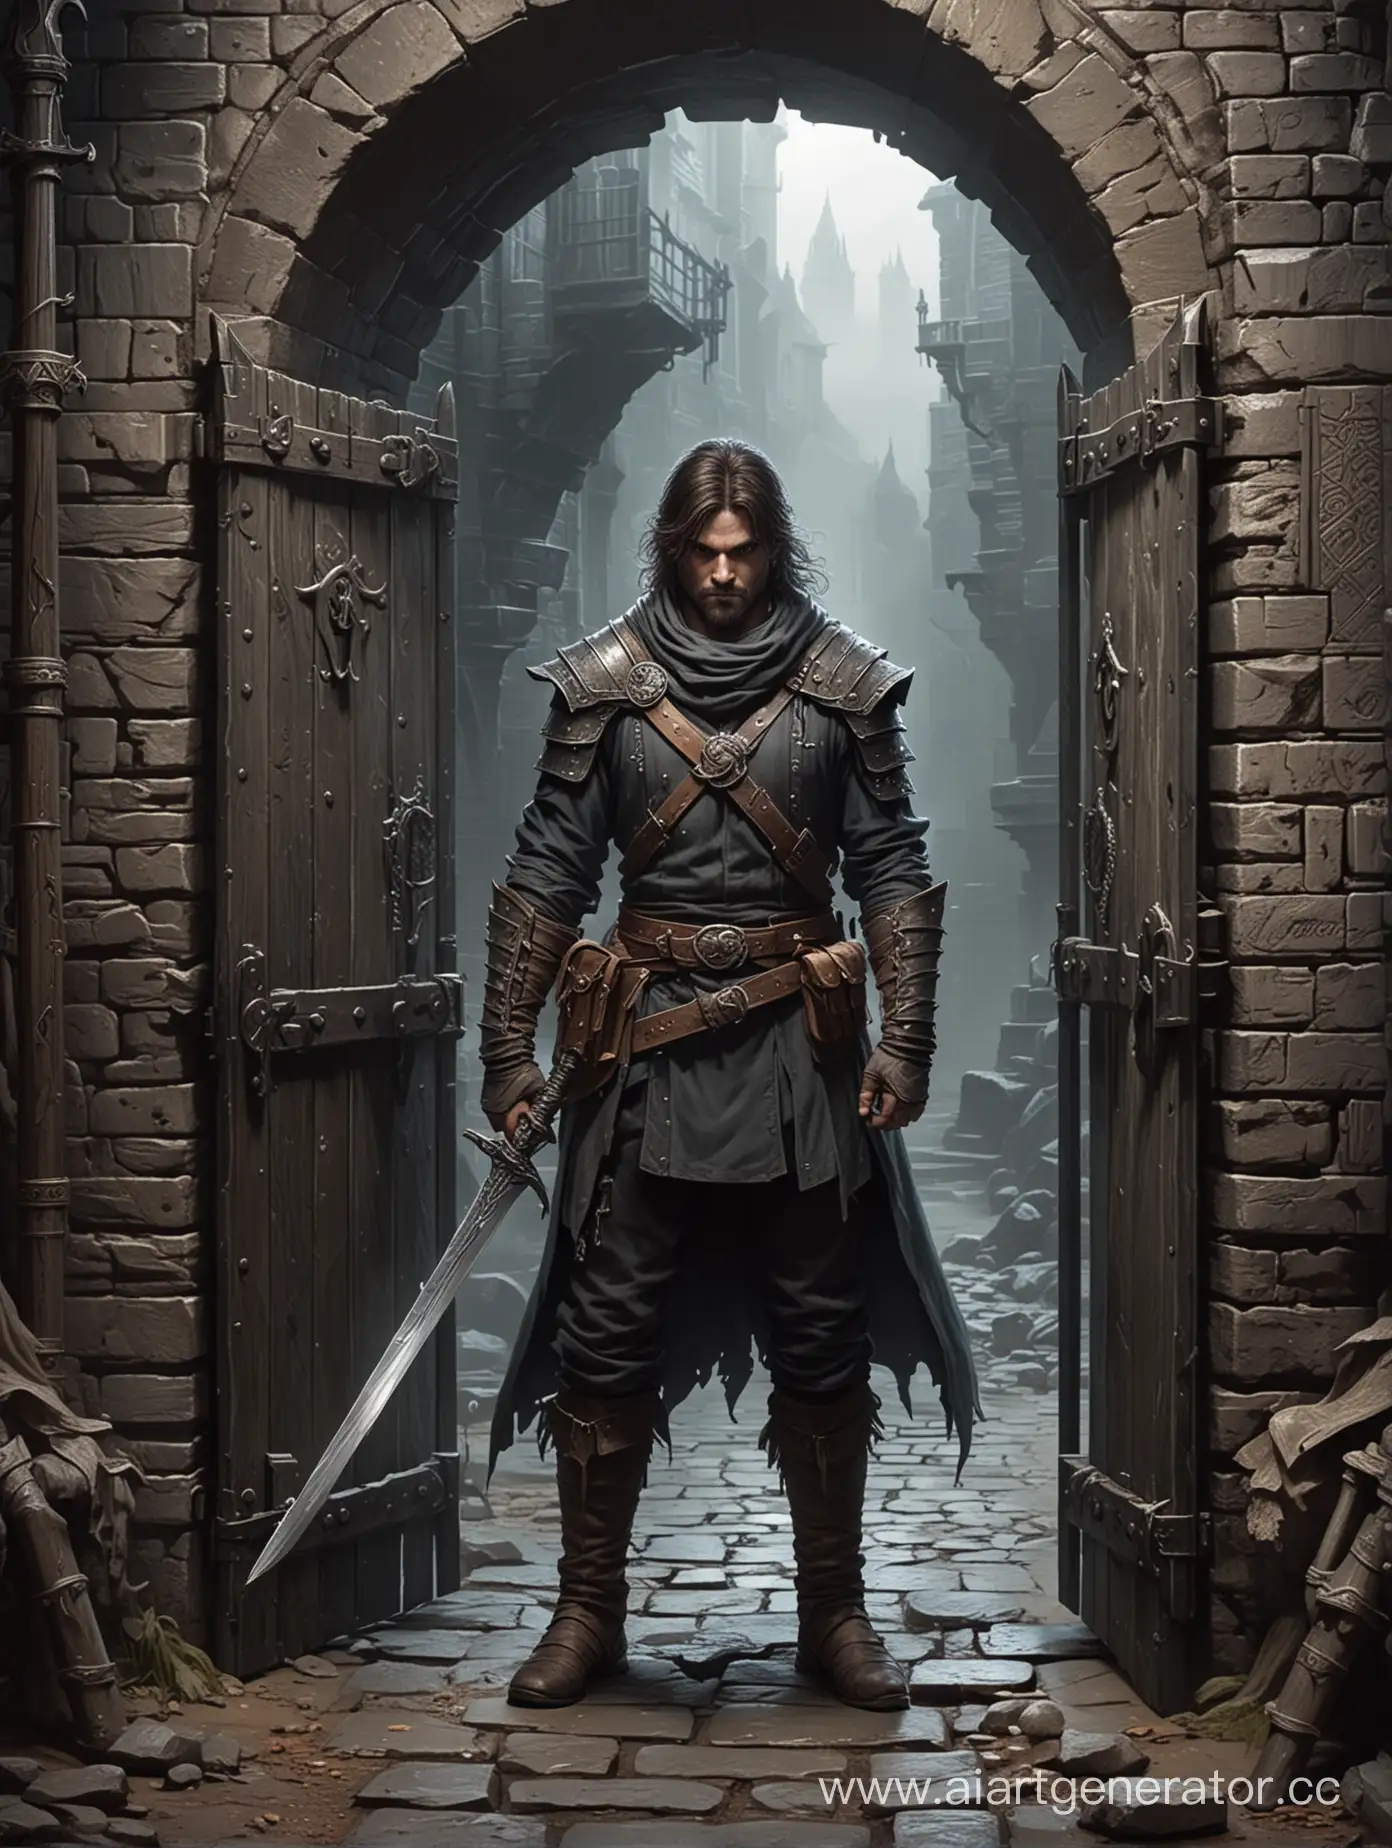 Fantasy-Mythology-Illustration-Bandit-Guarding-Dungeon-Gate-with-Sword